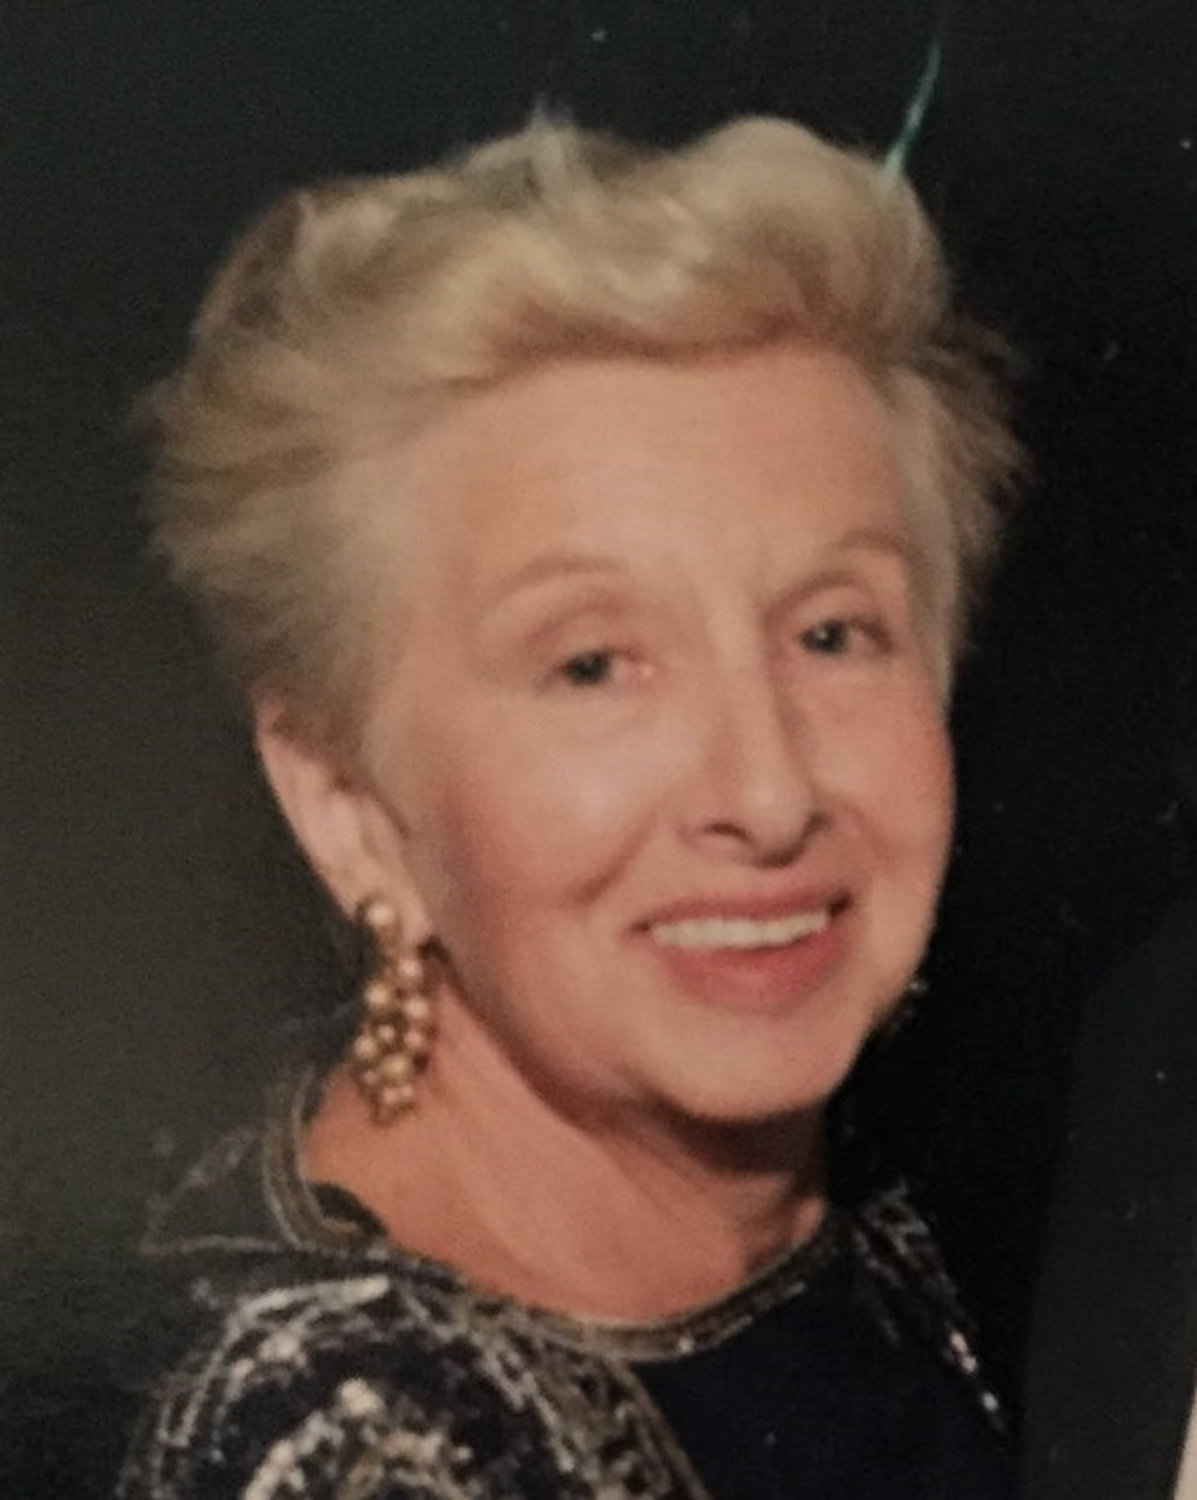 Gerda Wasserman